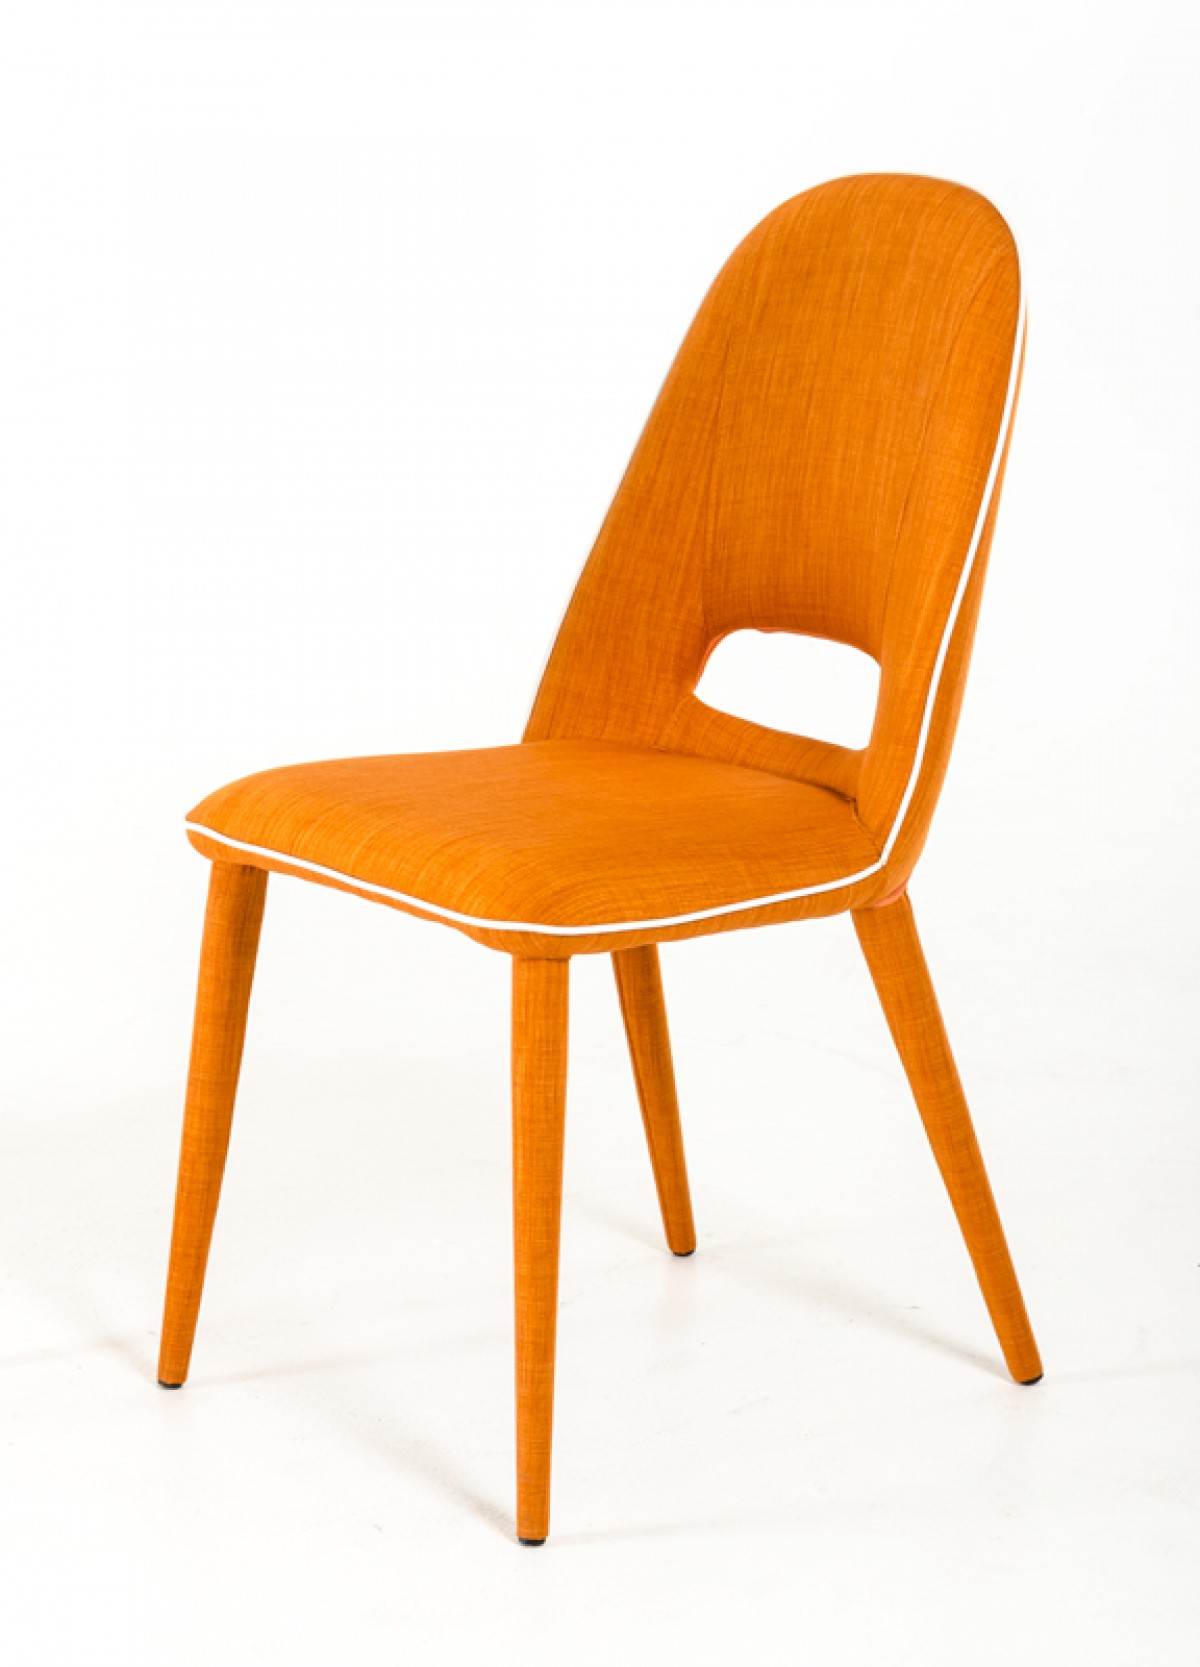 Buy the Kenneth Orange Fabric Dining Chairs at AdvancedInteriorDesigns.com